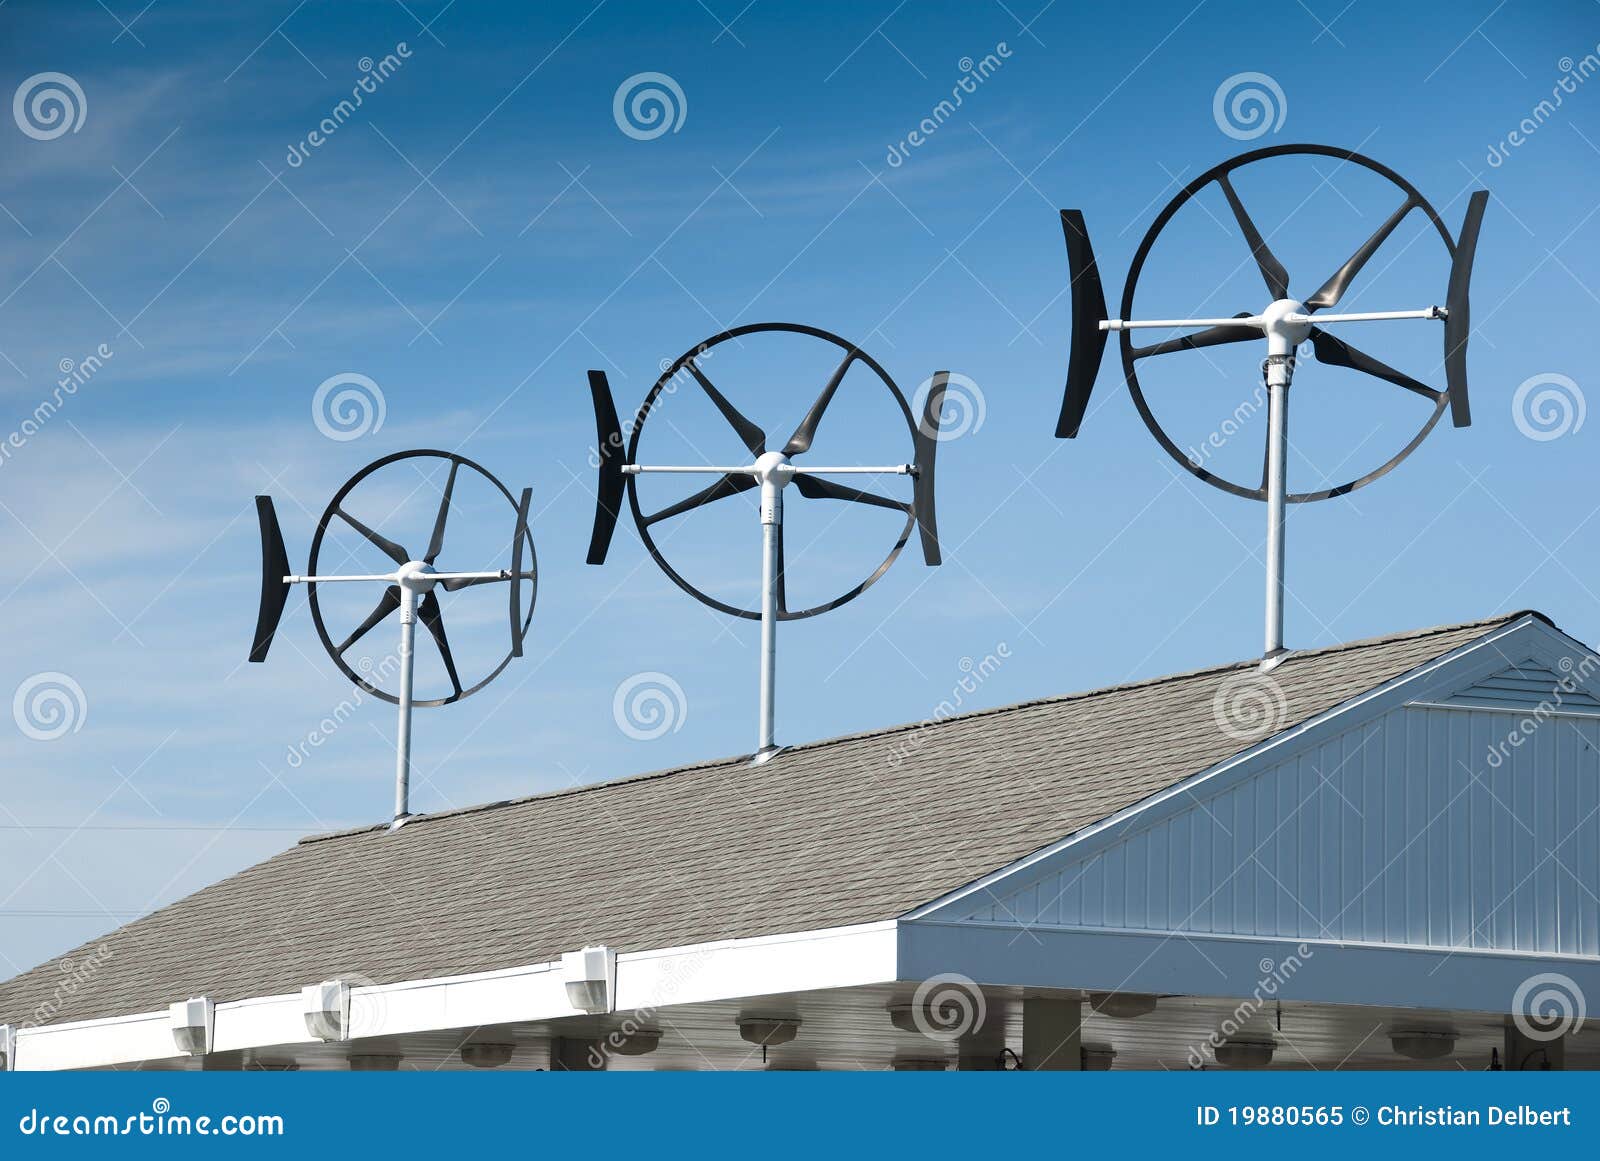 Small Wind Turbines Royalty Free Stock Photo - Image: 19880565